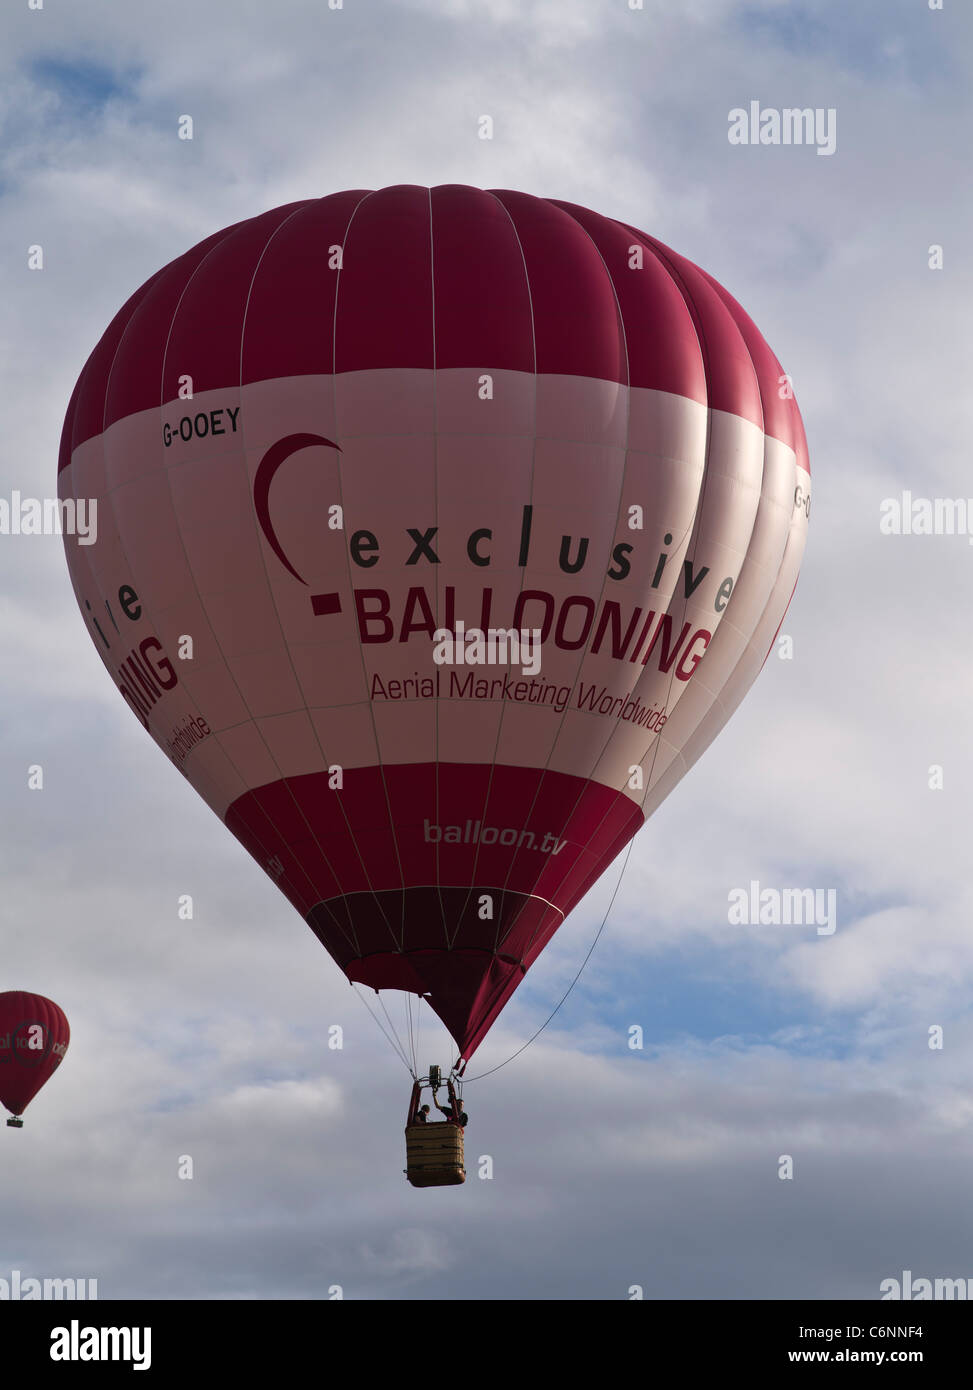 dh Bristol Balloon Fiesta CLIFTON BRISTOL UK Hot air balloon advertising Exclusive ballooning marketing in sky festival Stock Photo